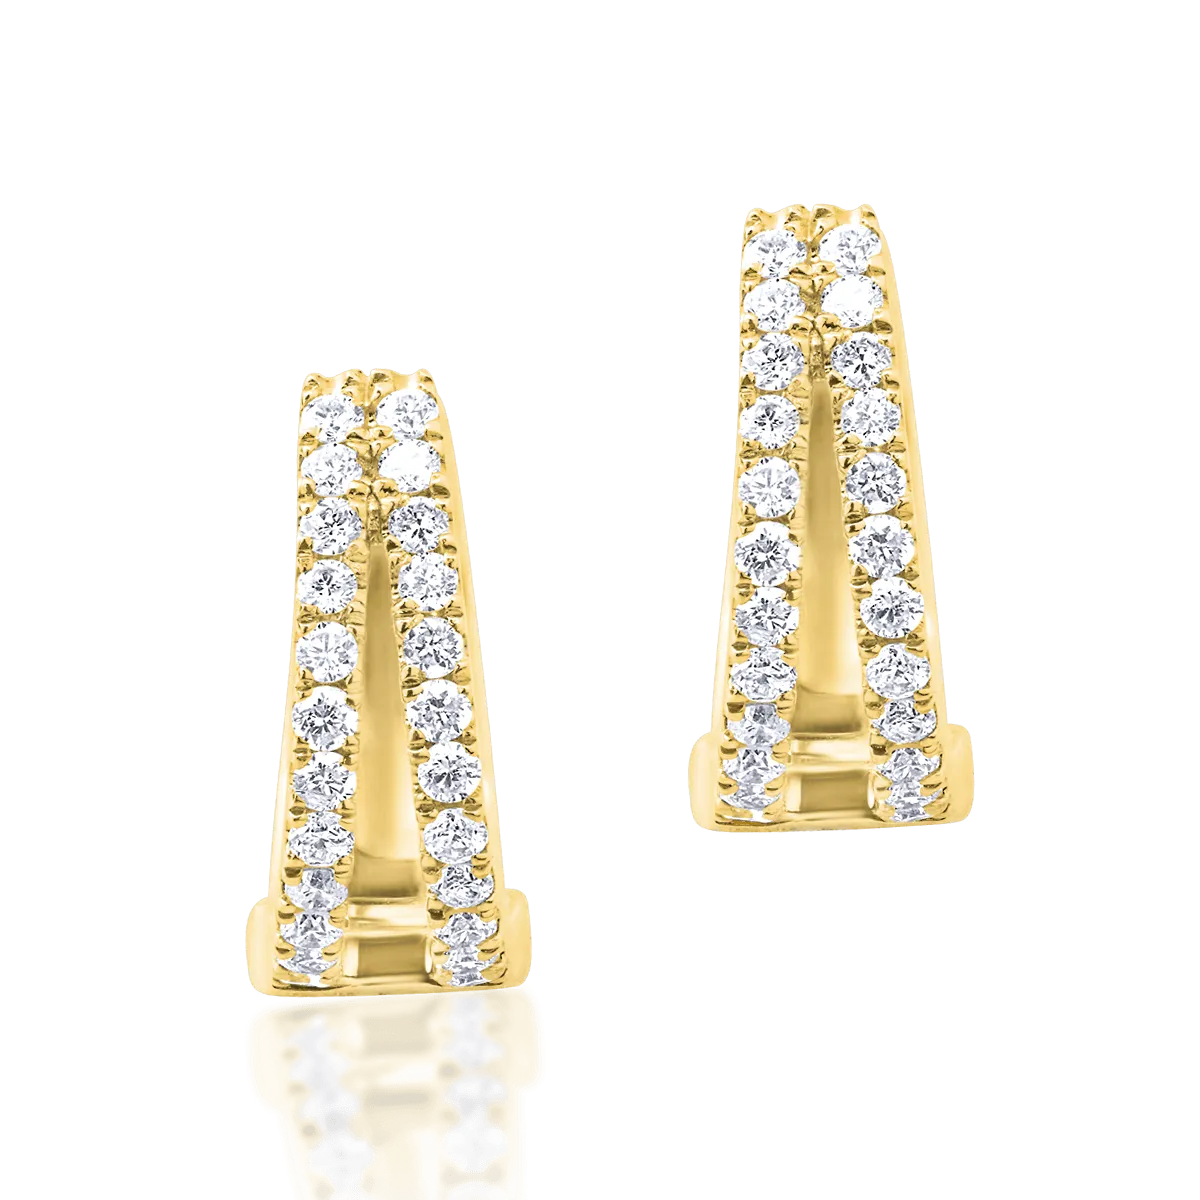 14K yellow gold earrings with 0.164ct diamonds